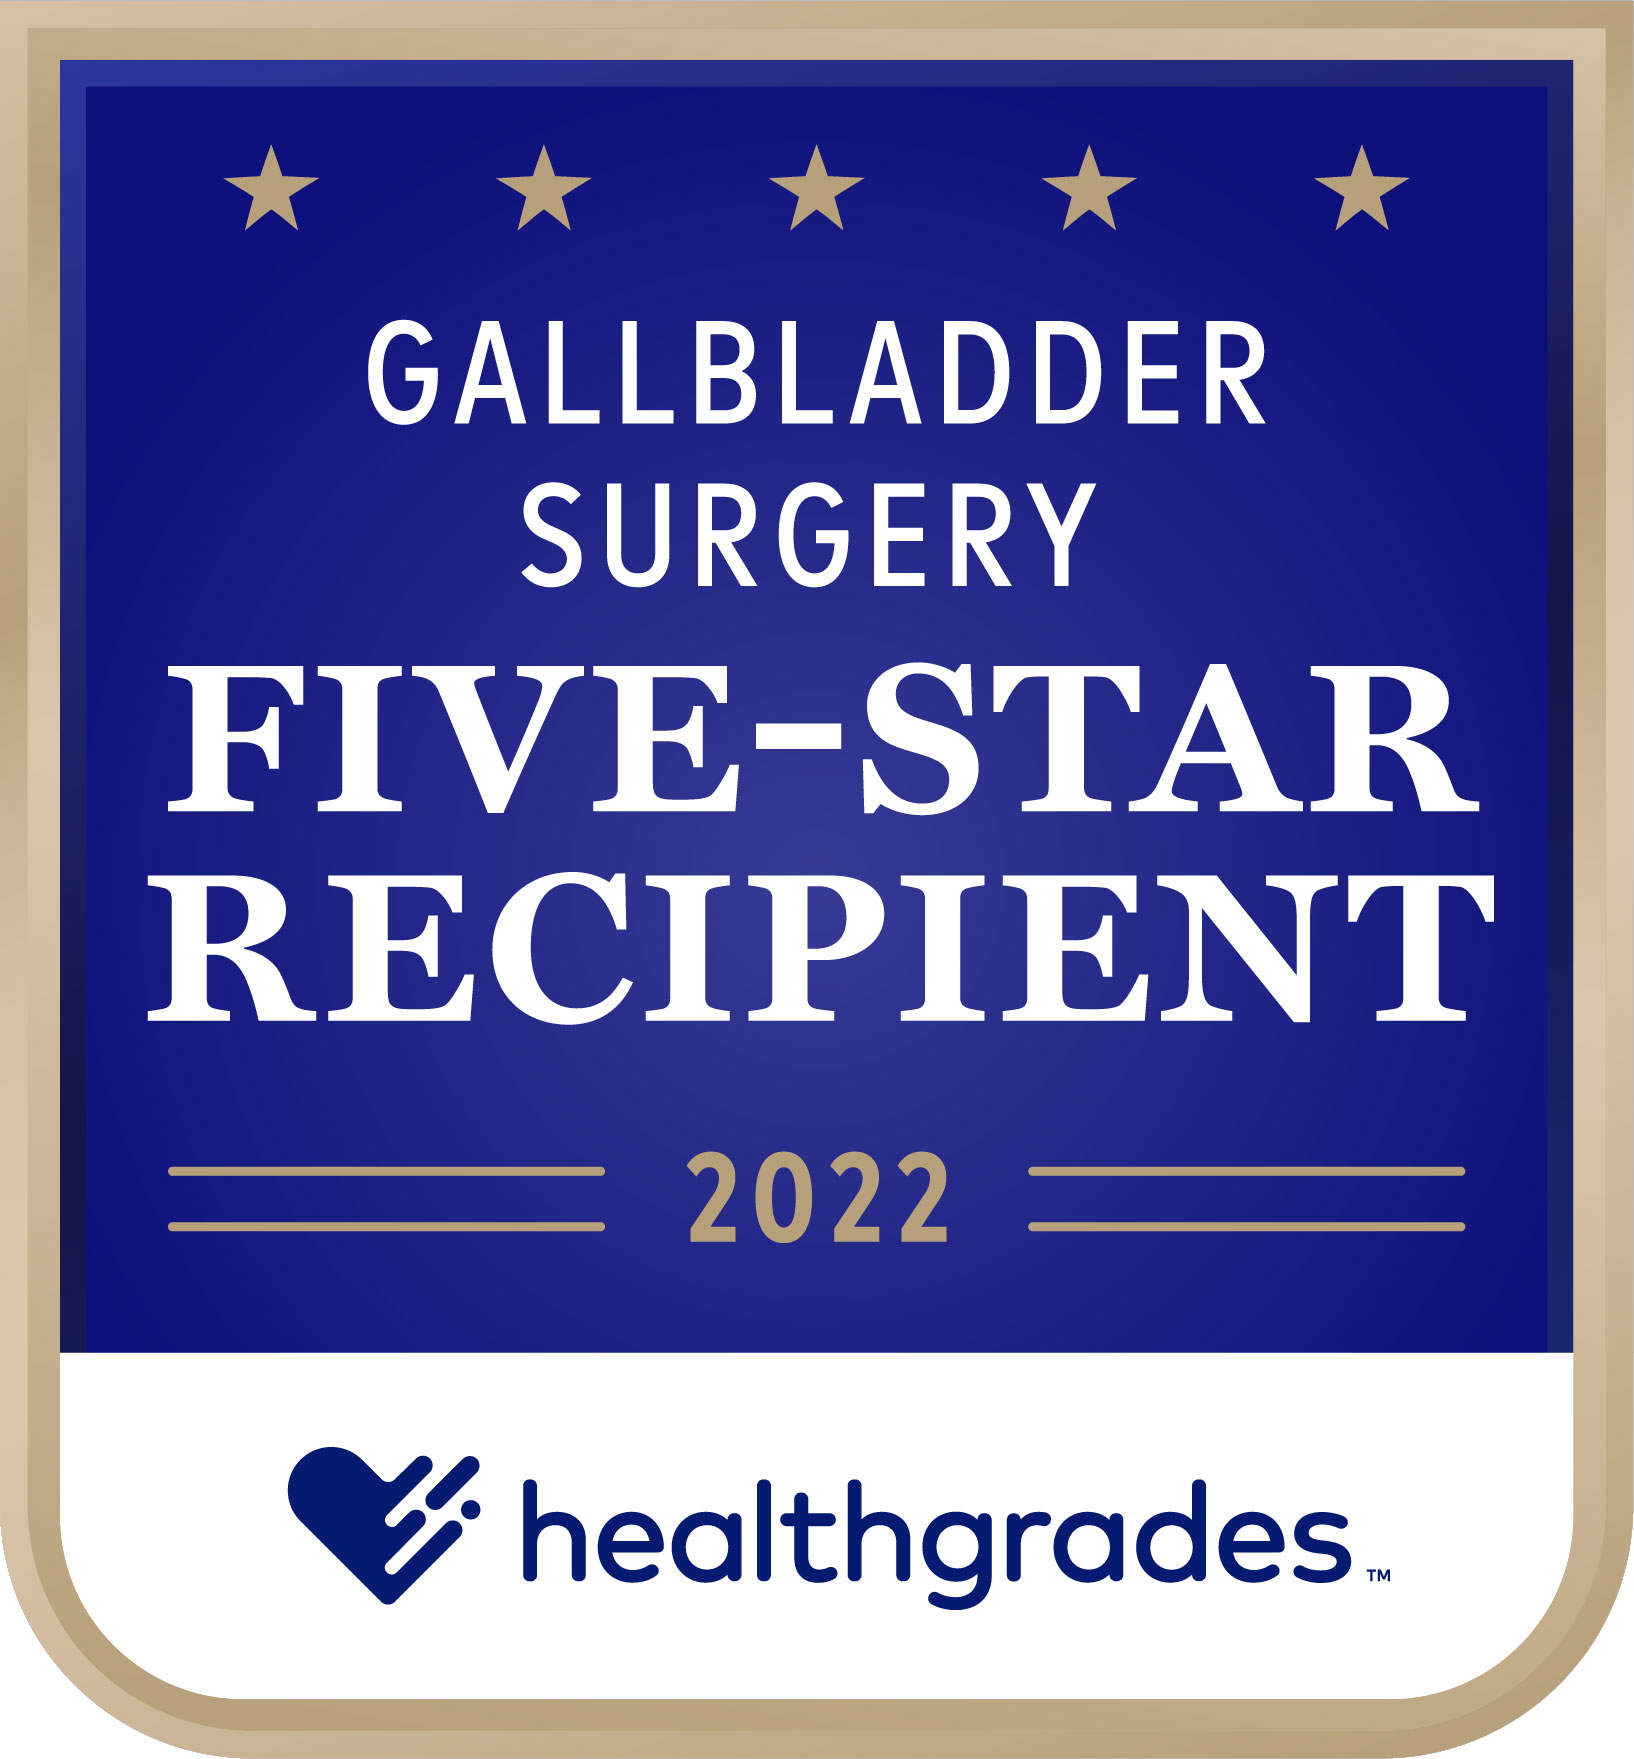 Five-Star_Gallbladder_Surgery_20224